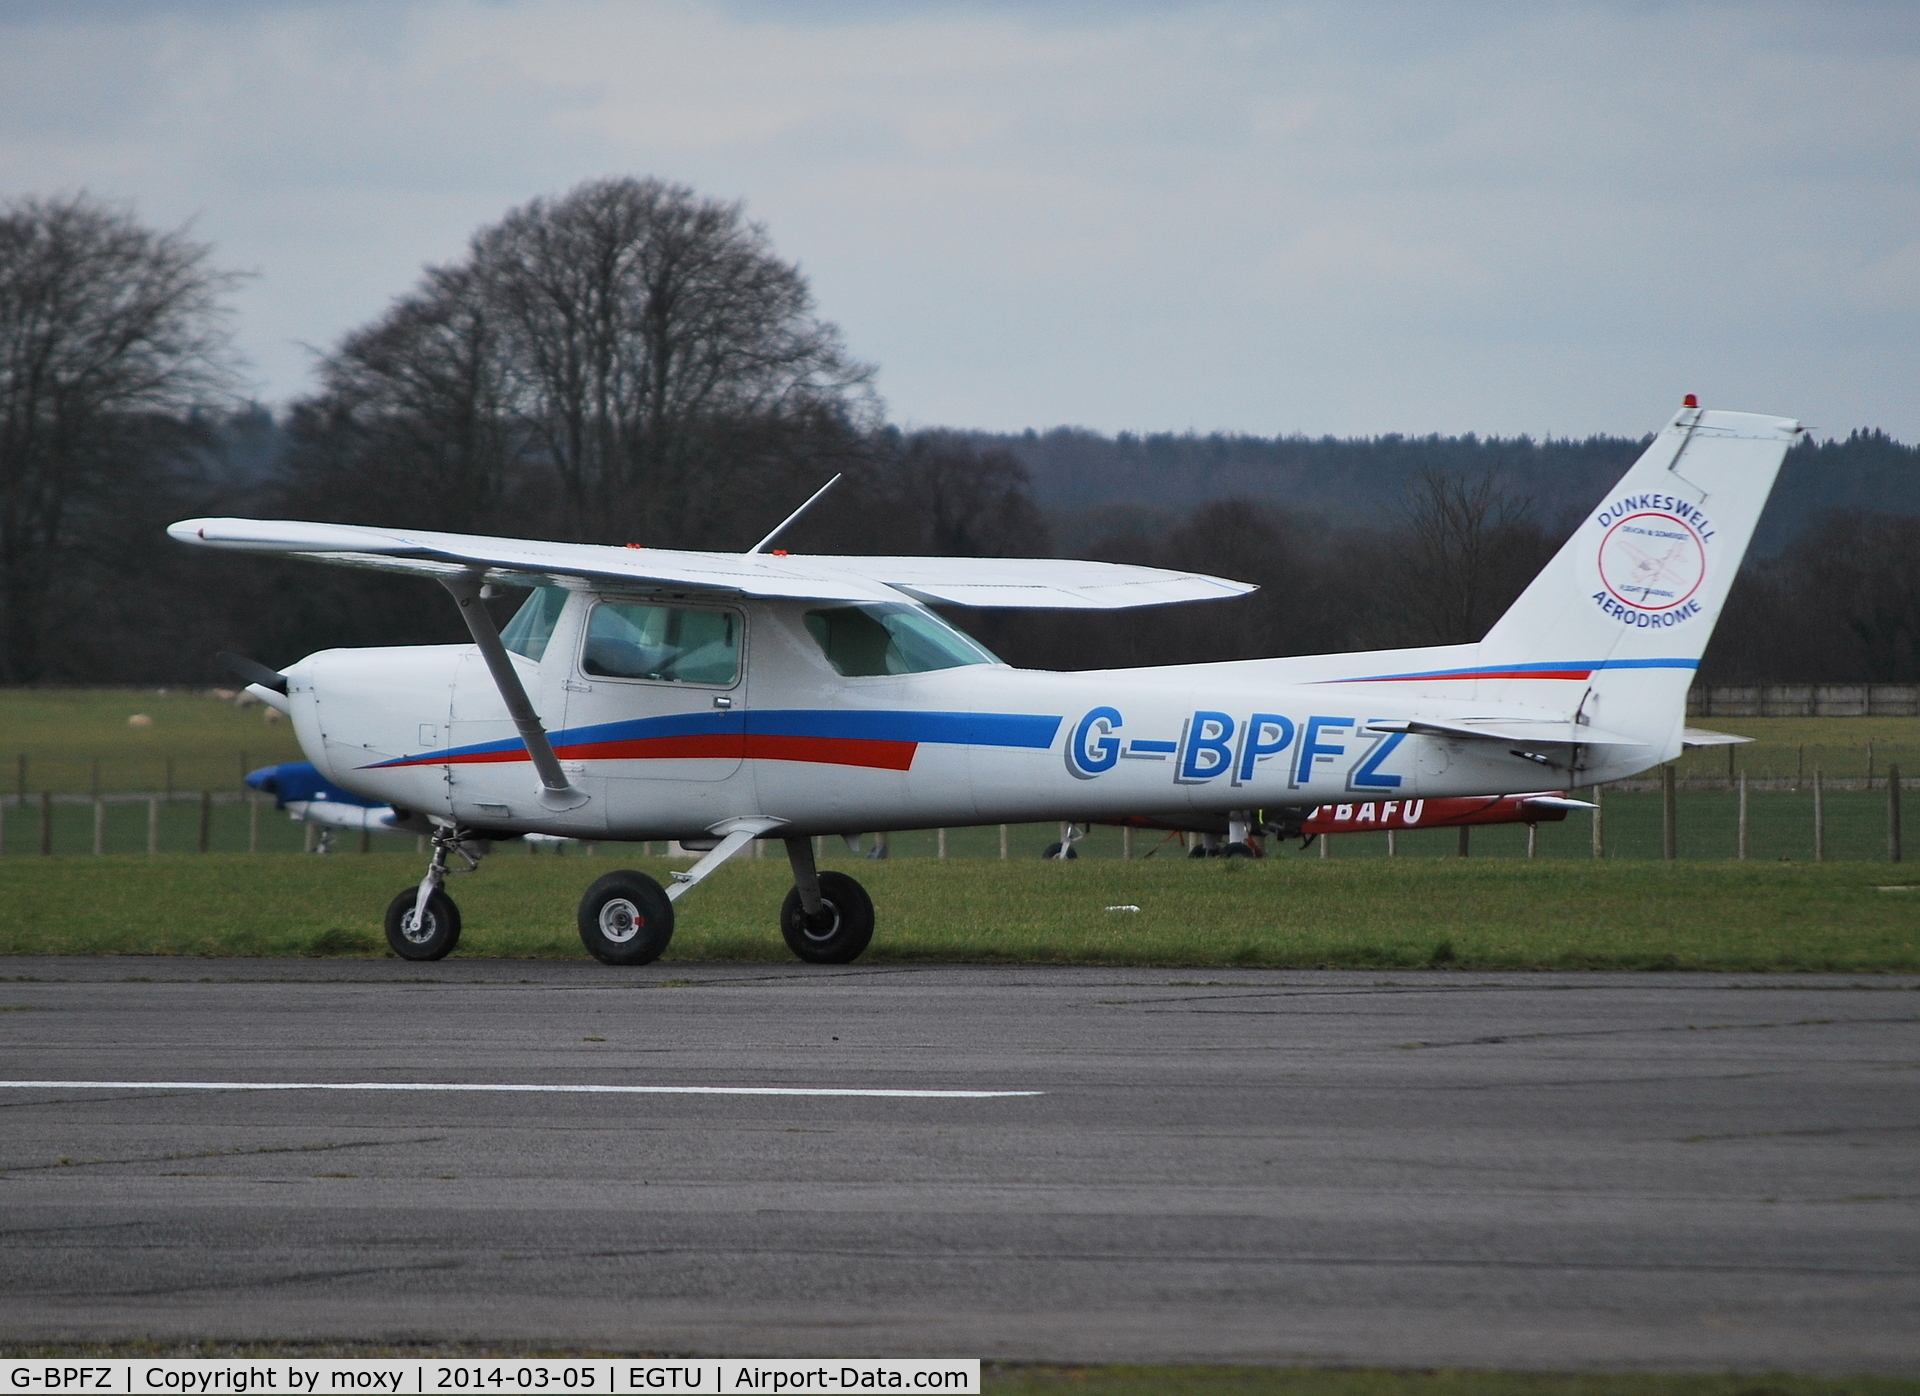 G-BPFZ, 1983 Cessna 152 C/N 152-85741, Cessna 152 at Dunkeswell. Ex N94594.